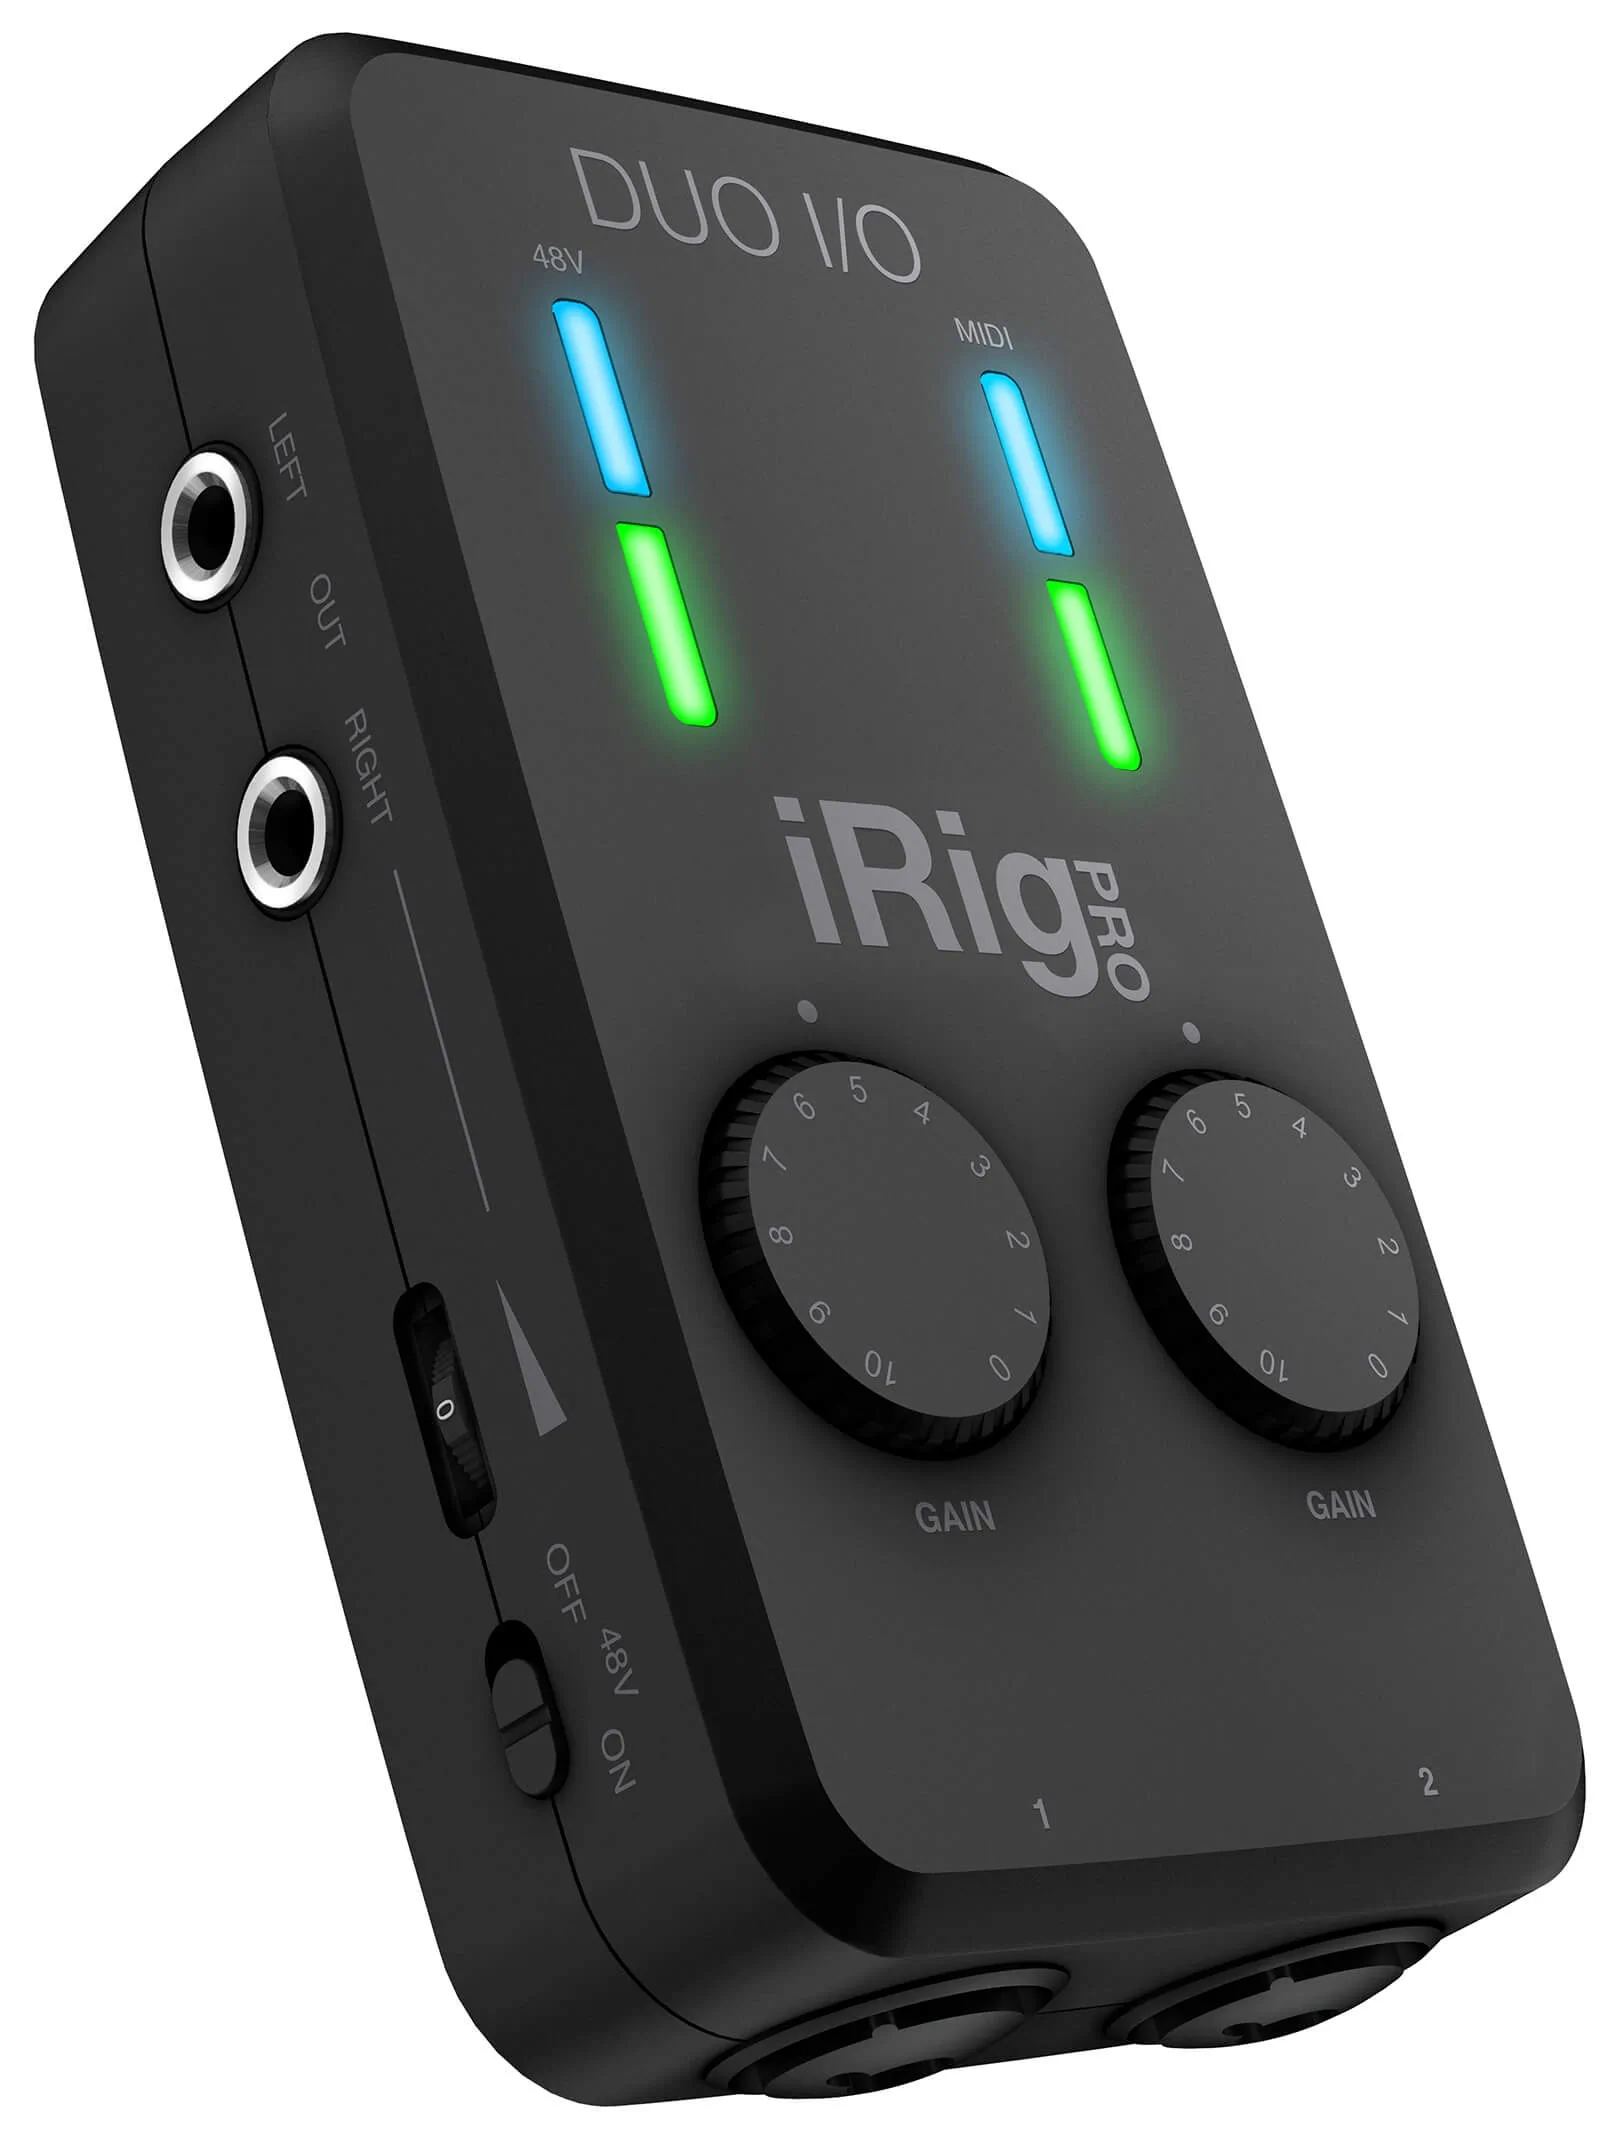 iRig Pro Duo I/O audio interface adds dedicated Windows